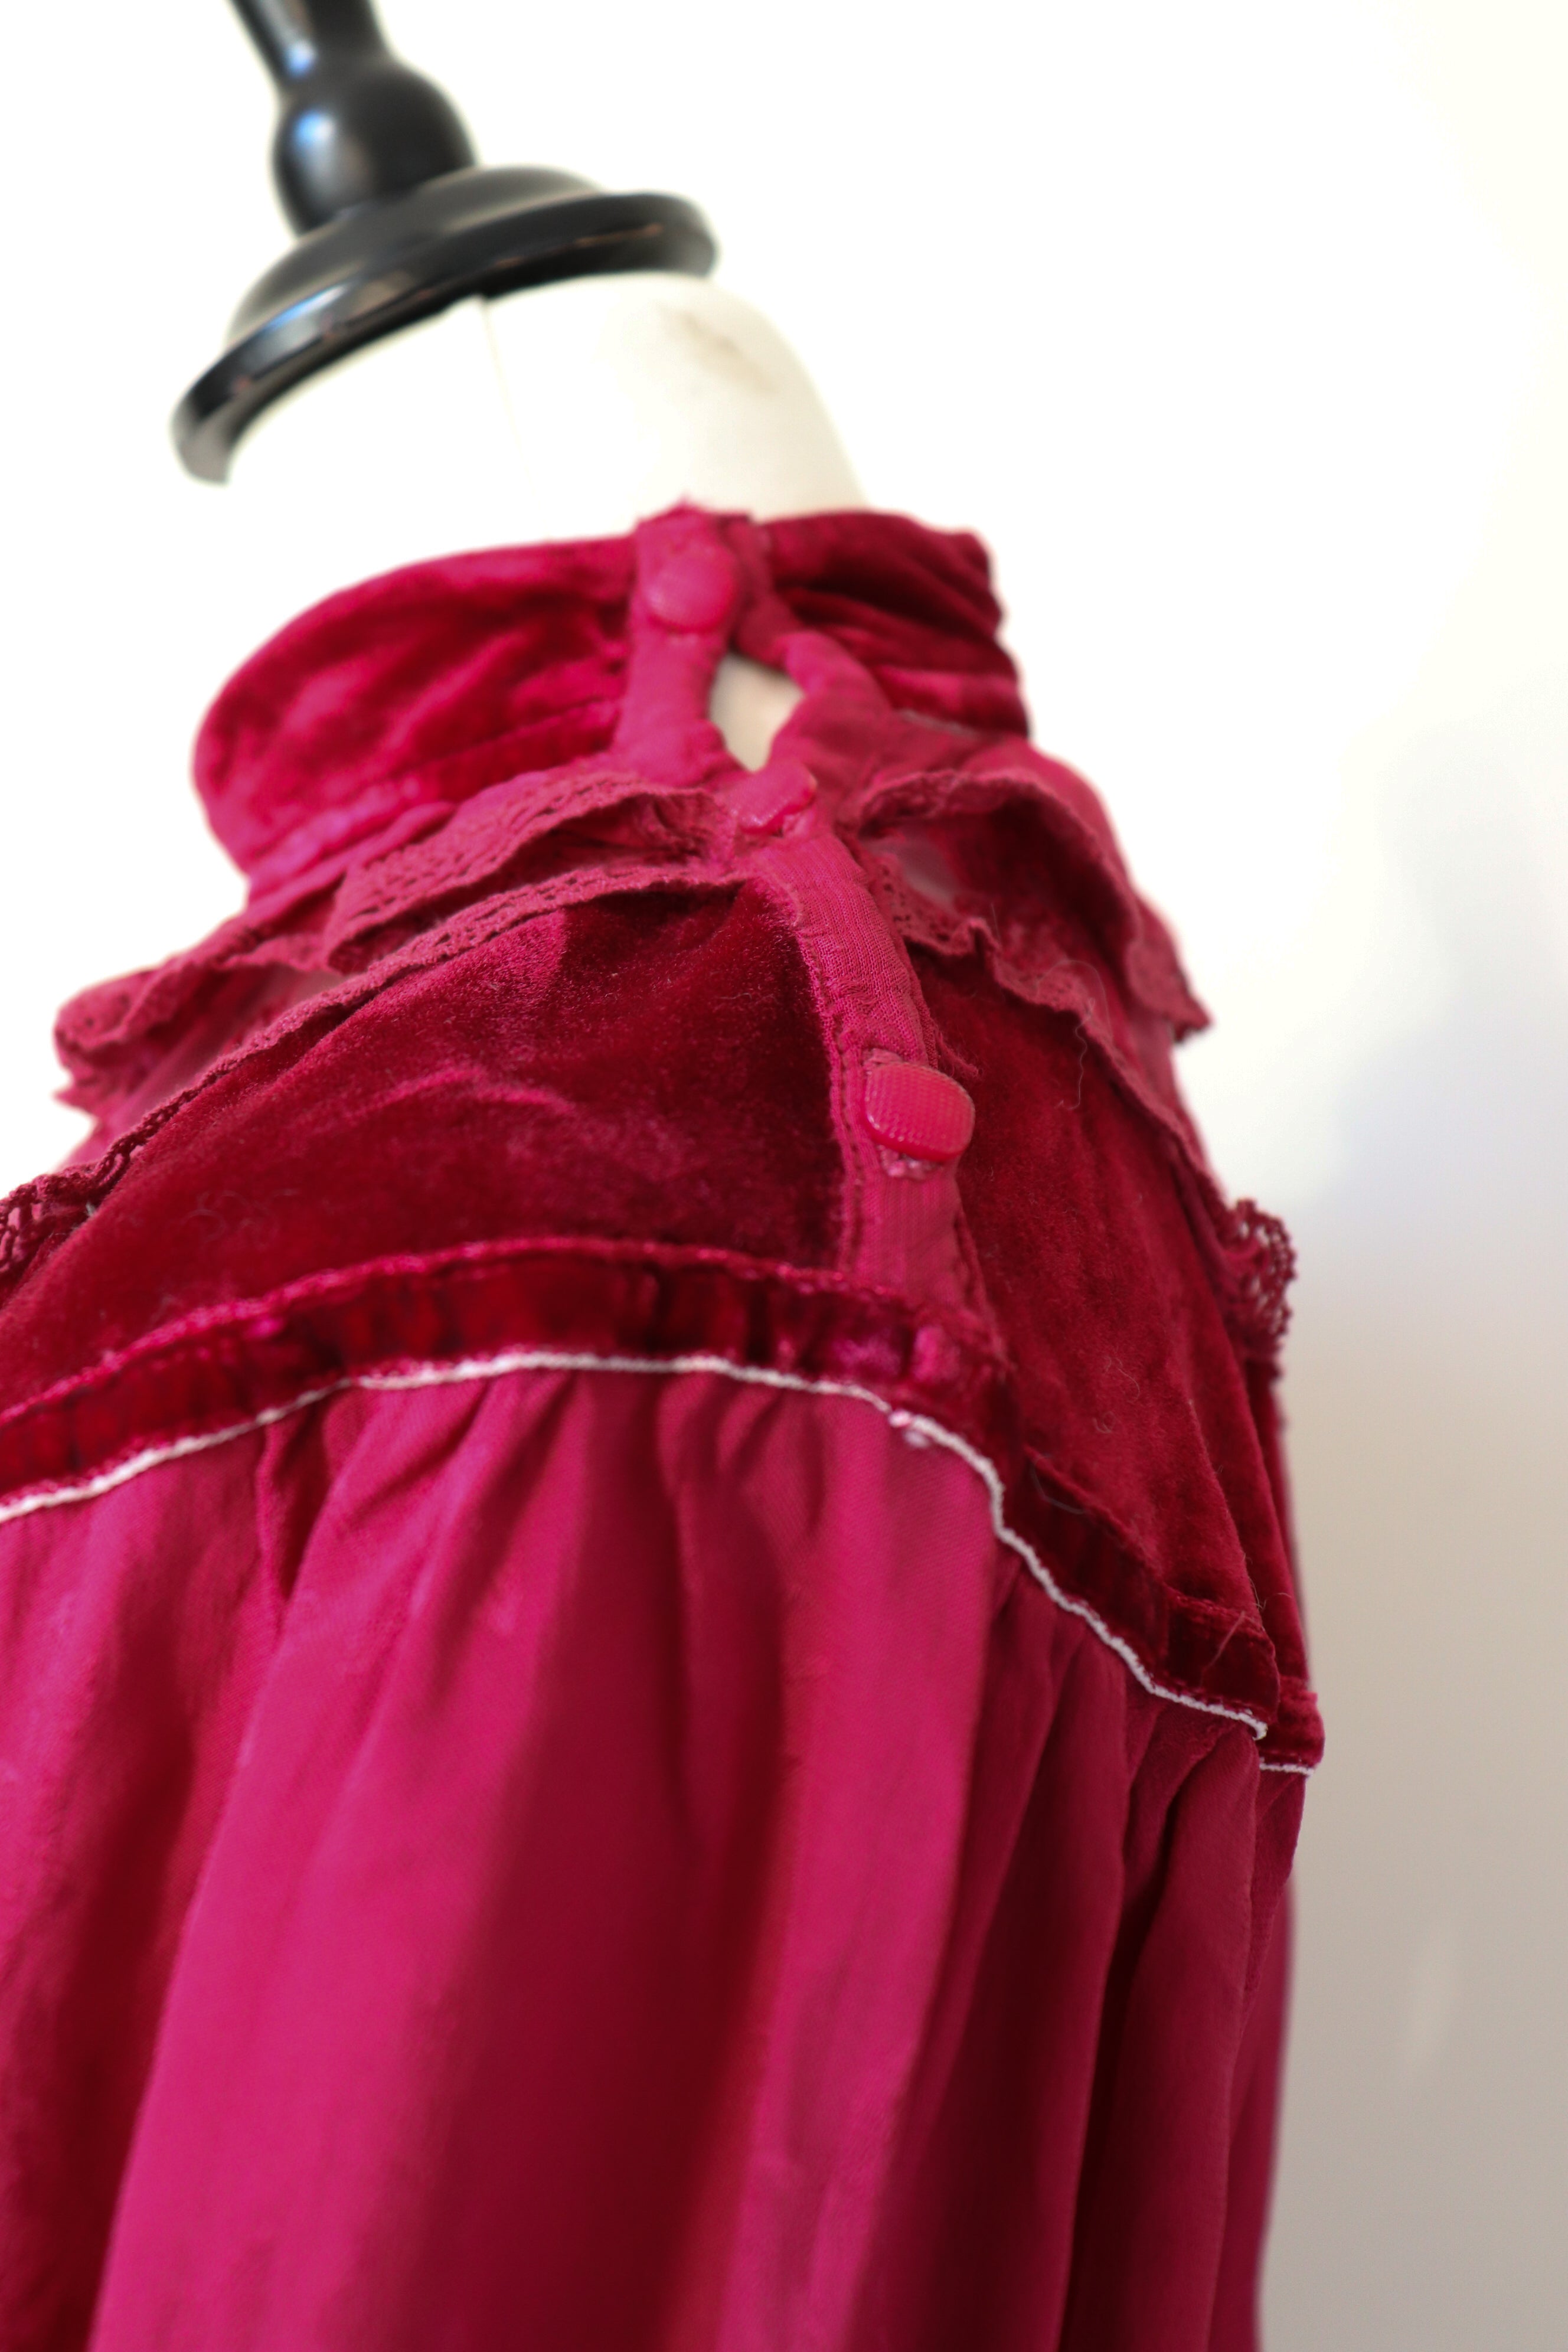 Vintage Praire Dress - Red - Long Sleeve - Elastic Waist - 1980s - M / UK 12